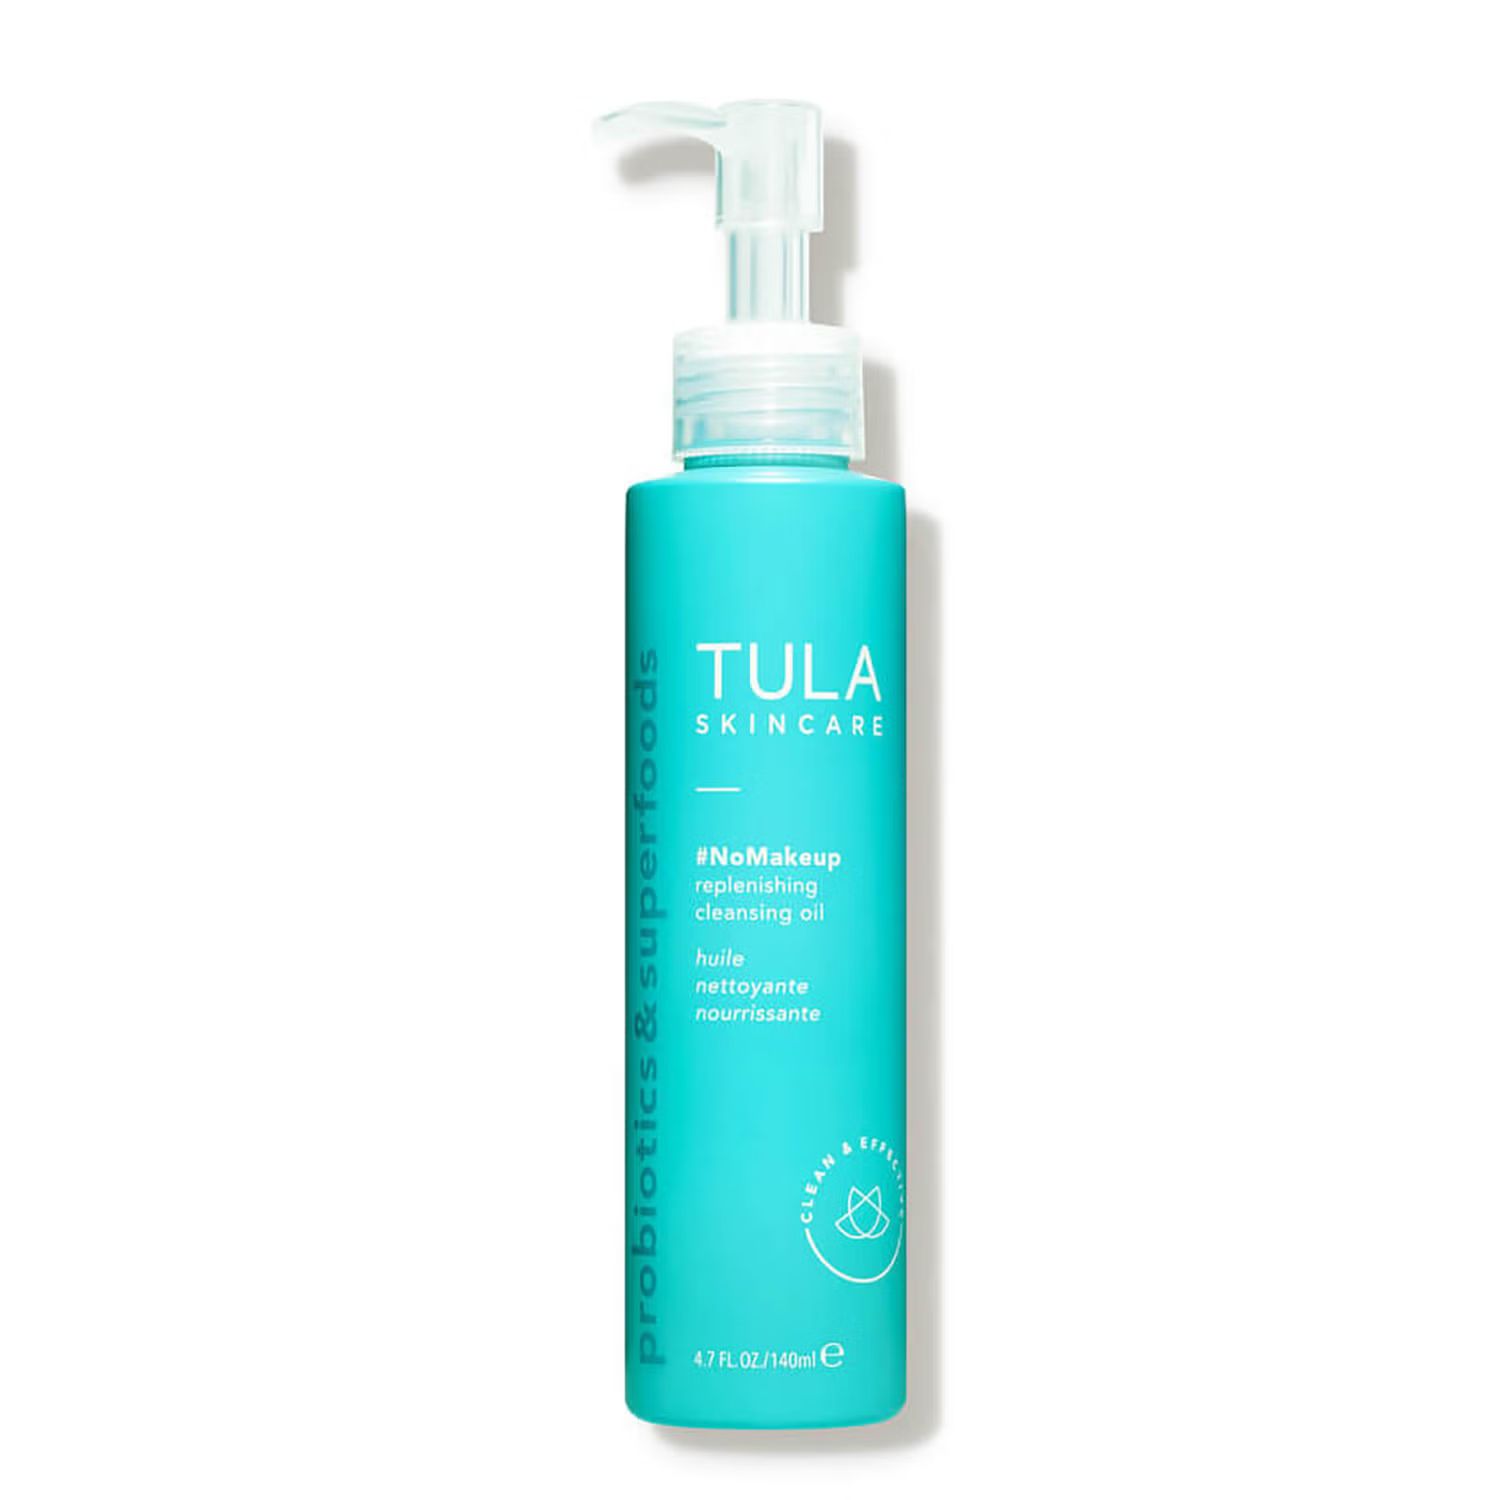 TULA Skincare NoMakeup Replenishing Cleansing Oil (4.7 fl. oz.) | Dermstore